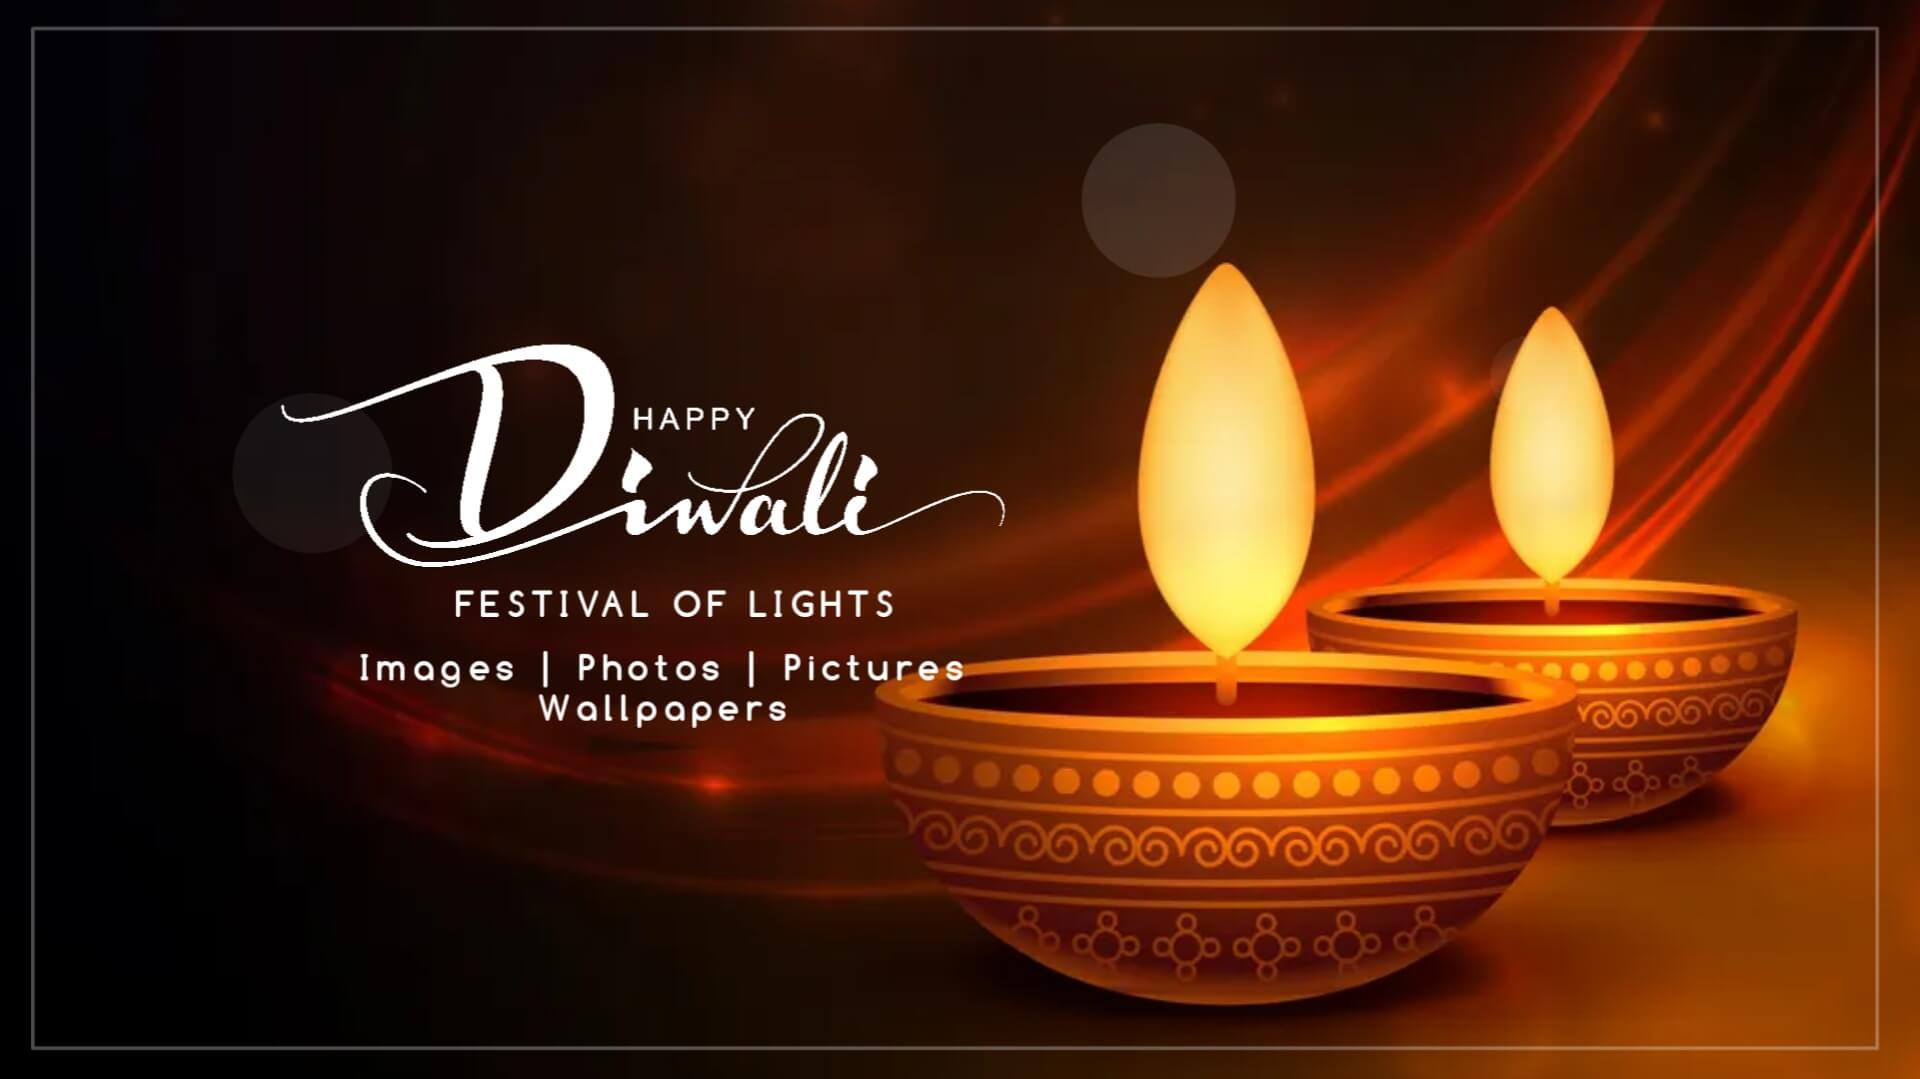 Details more than 80 wallpaper diwali images